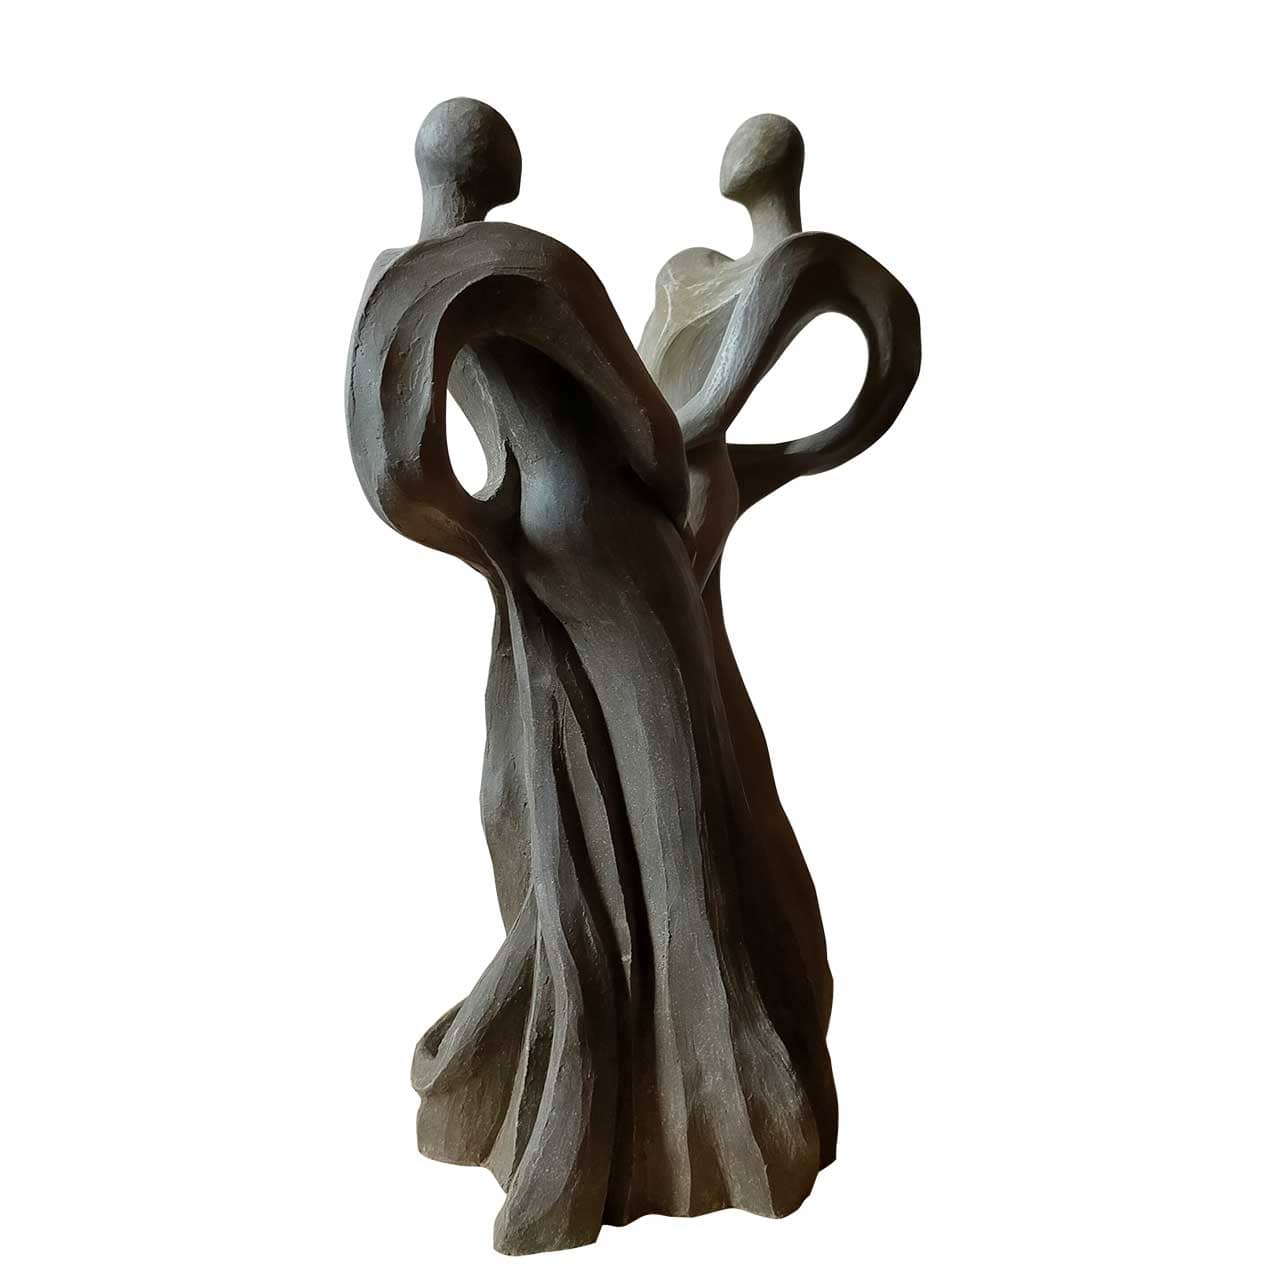 Metamorphosis 35|36 sculptures collection 2022
Denise Gemin author
view03